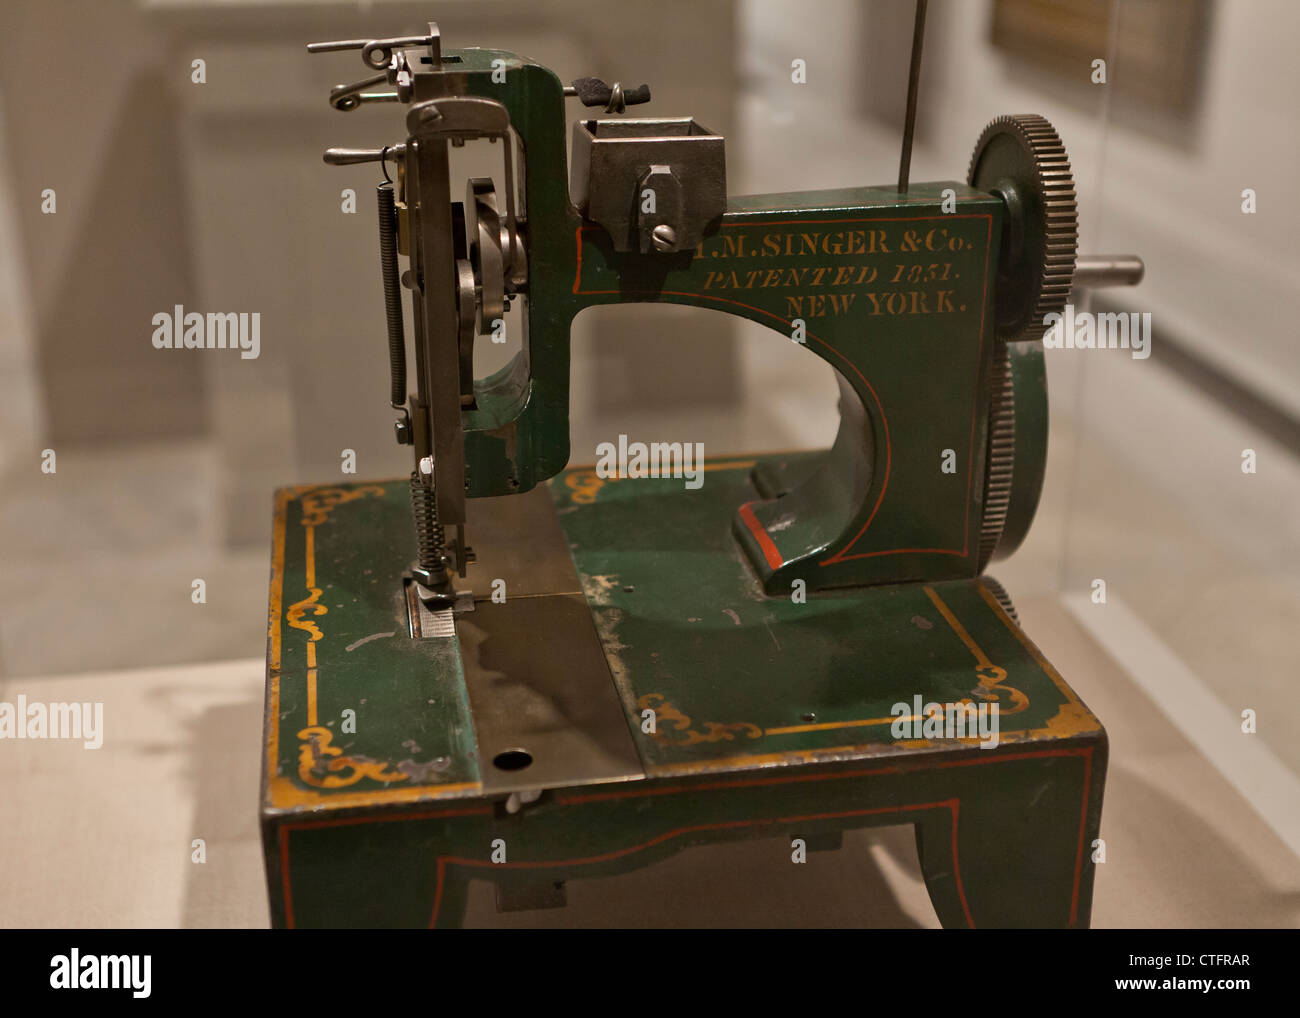 Singer sewing machine patent model, 1854 Stock Photo